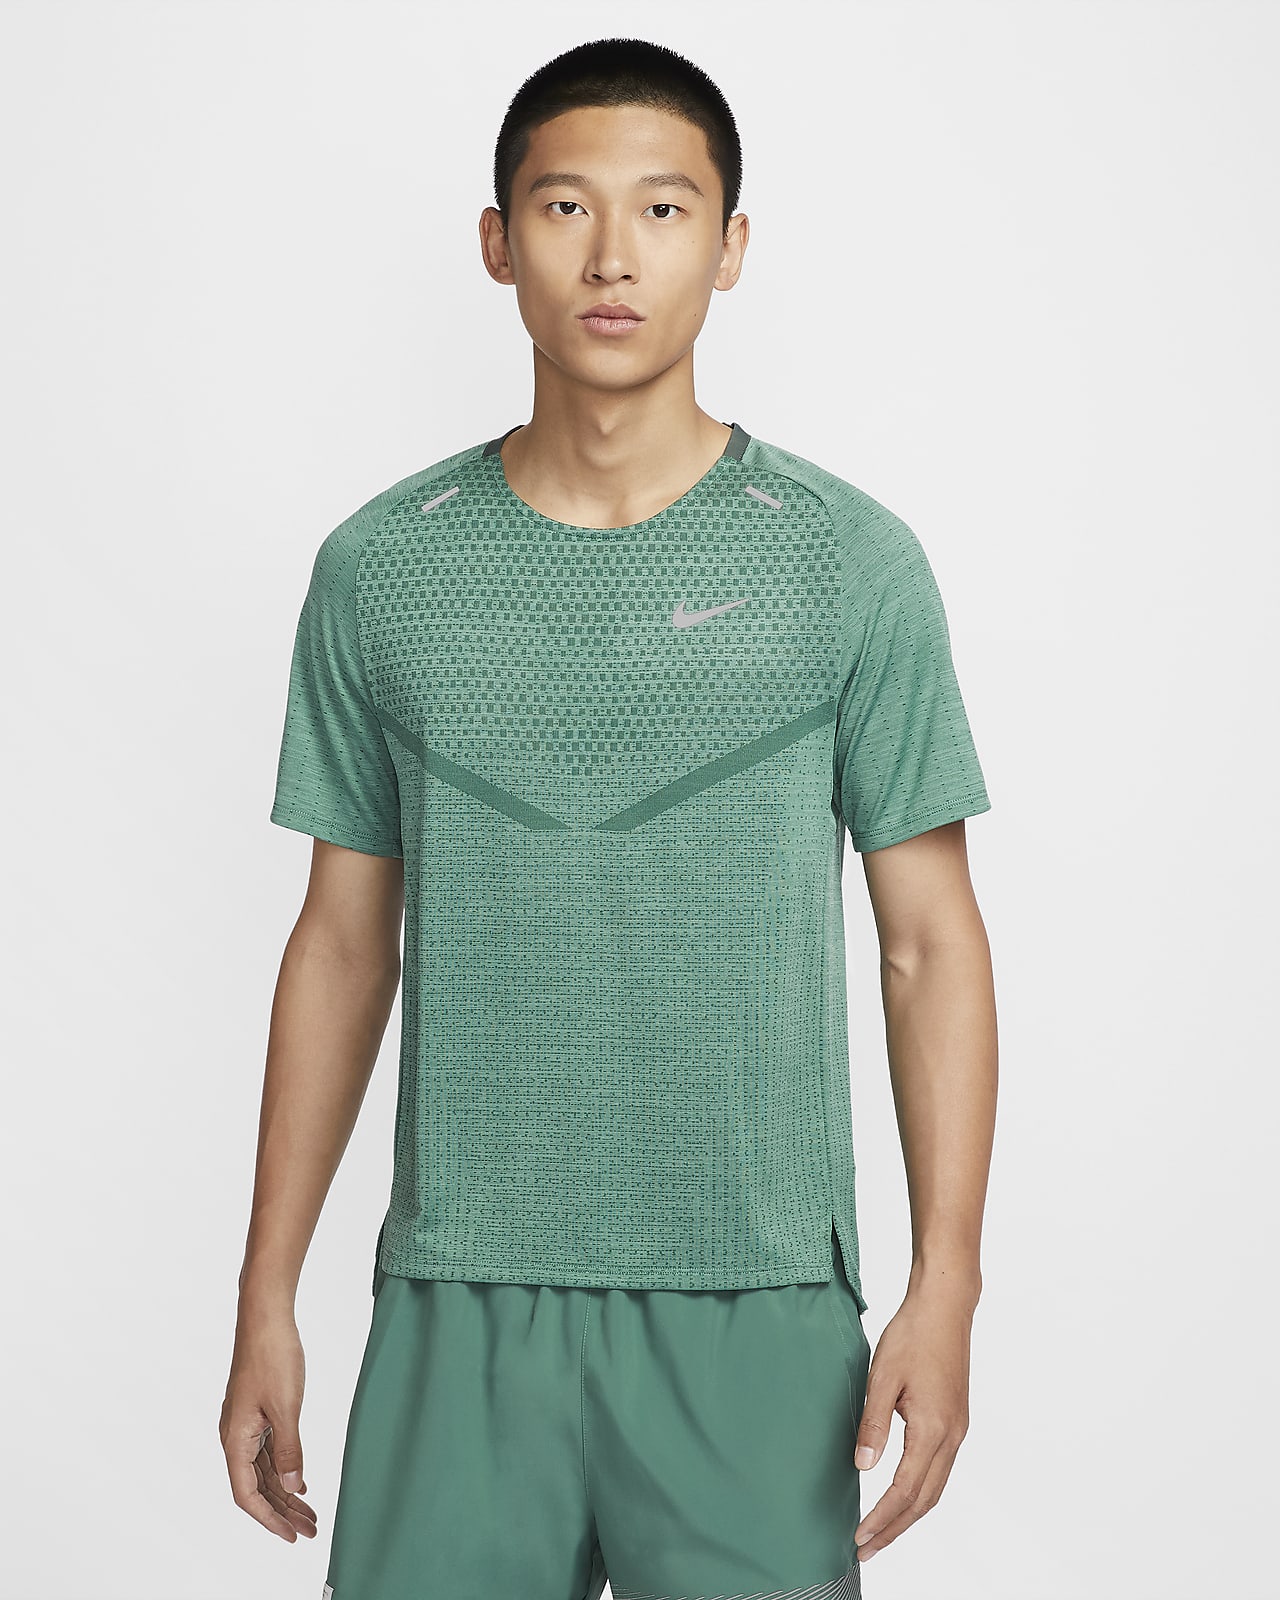 Nike Dri-FIT ADV TechKnit Ultra Men's Short-Sleeve Running Top